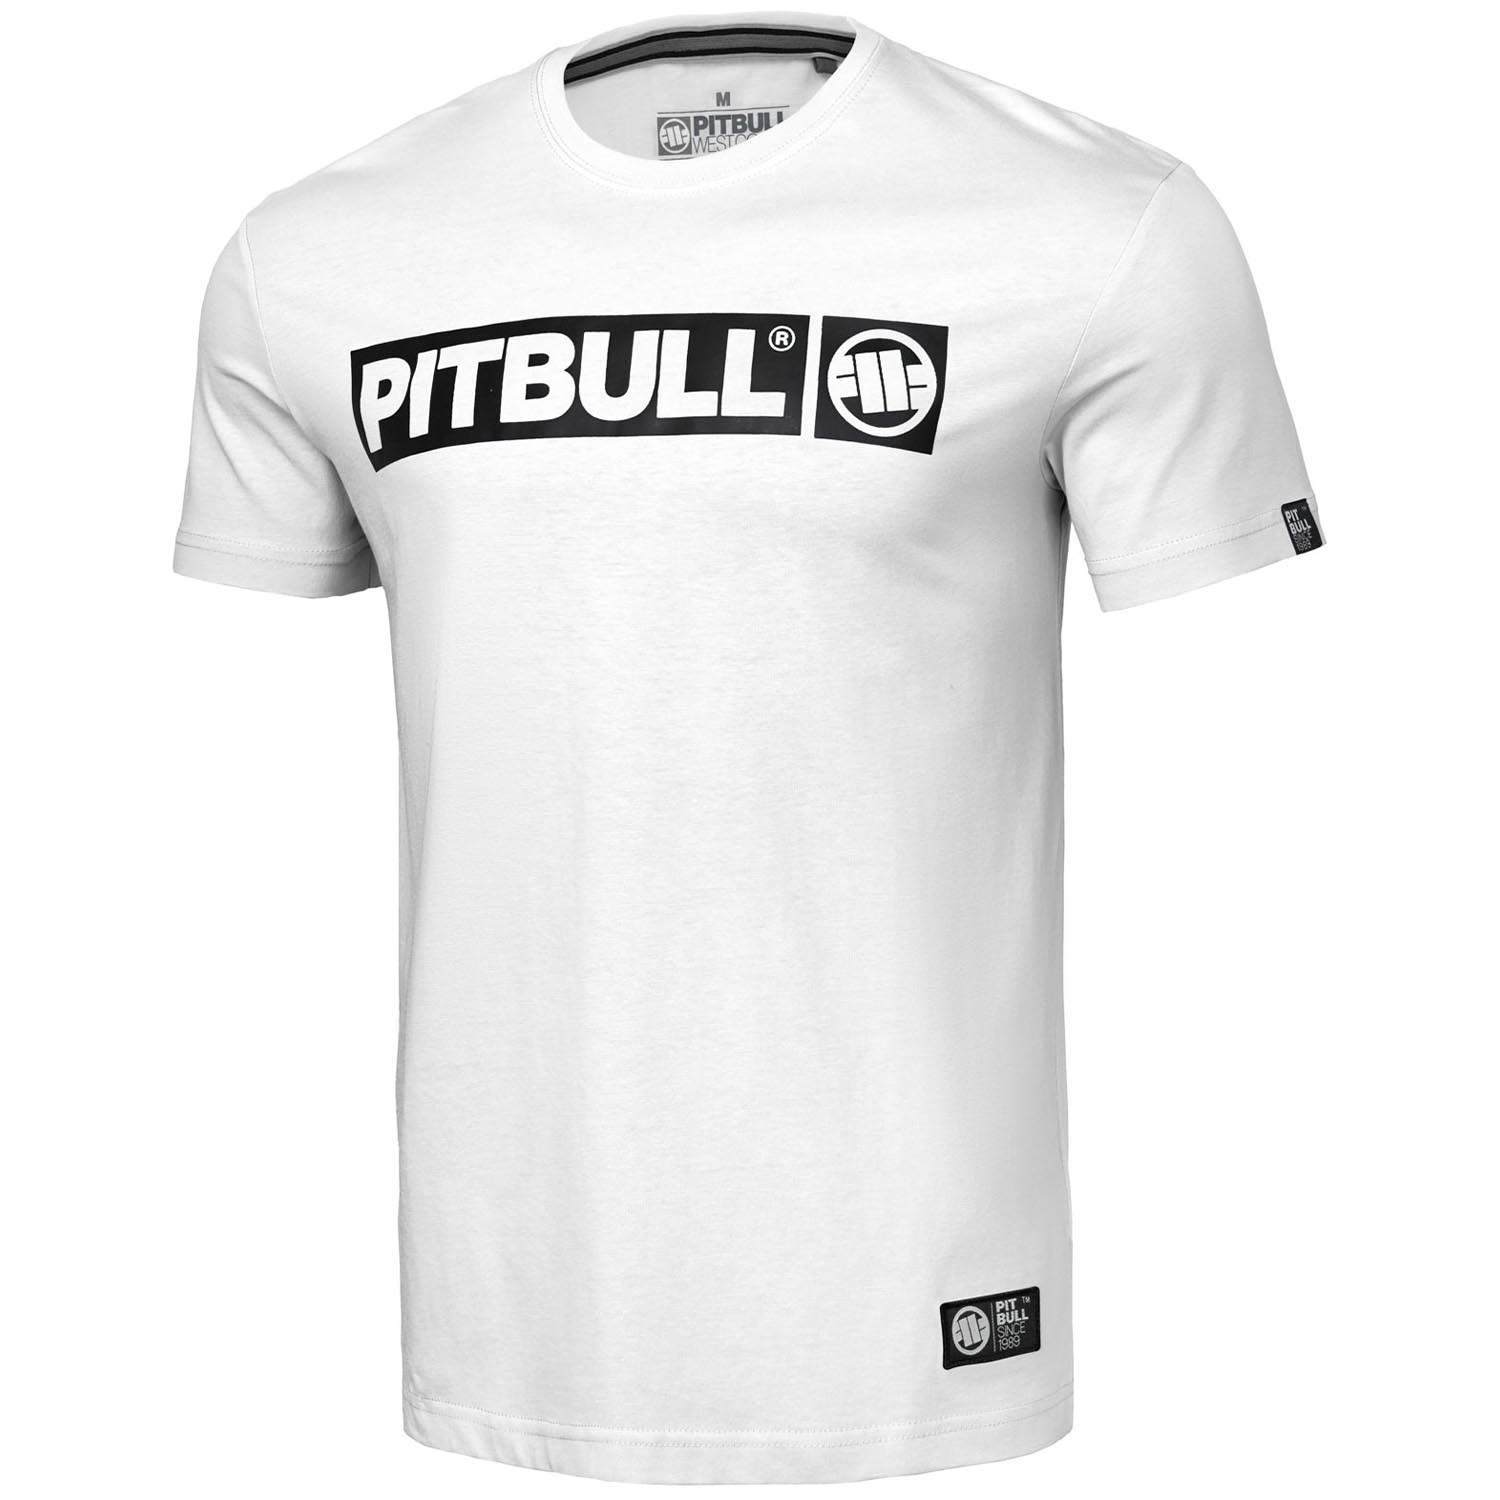 Pit Bull West Coast T-Shirt, Hilltop S70, weiß